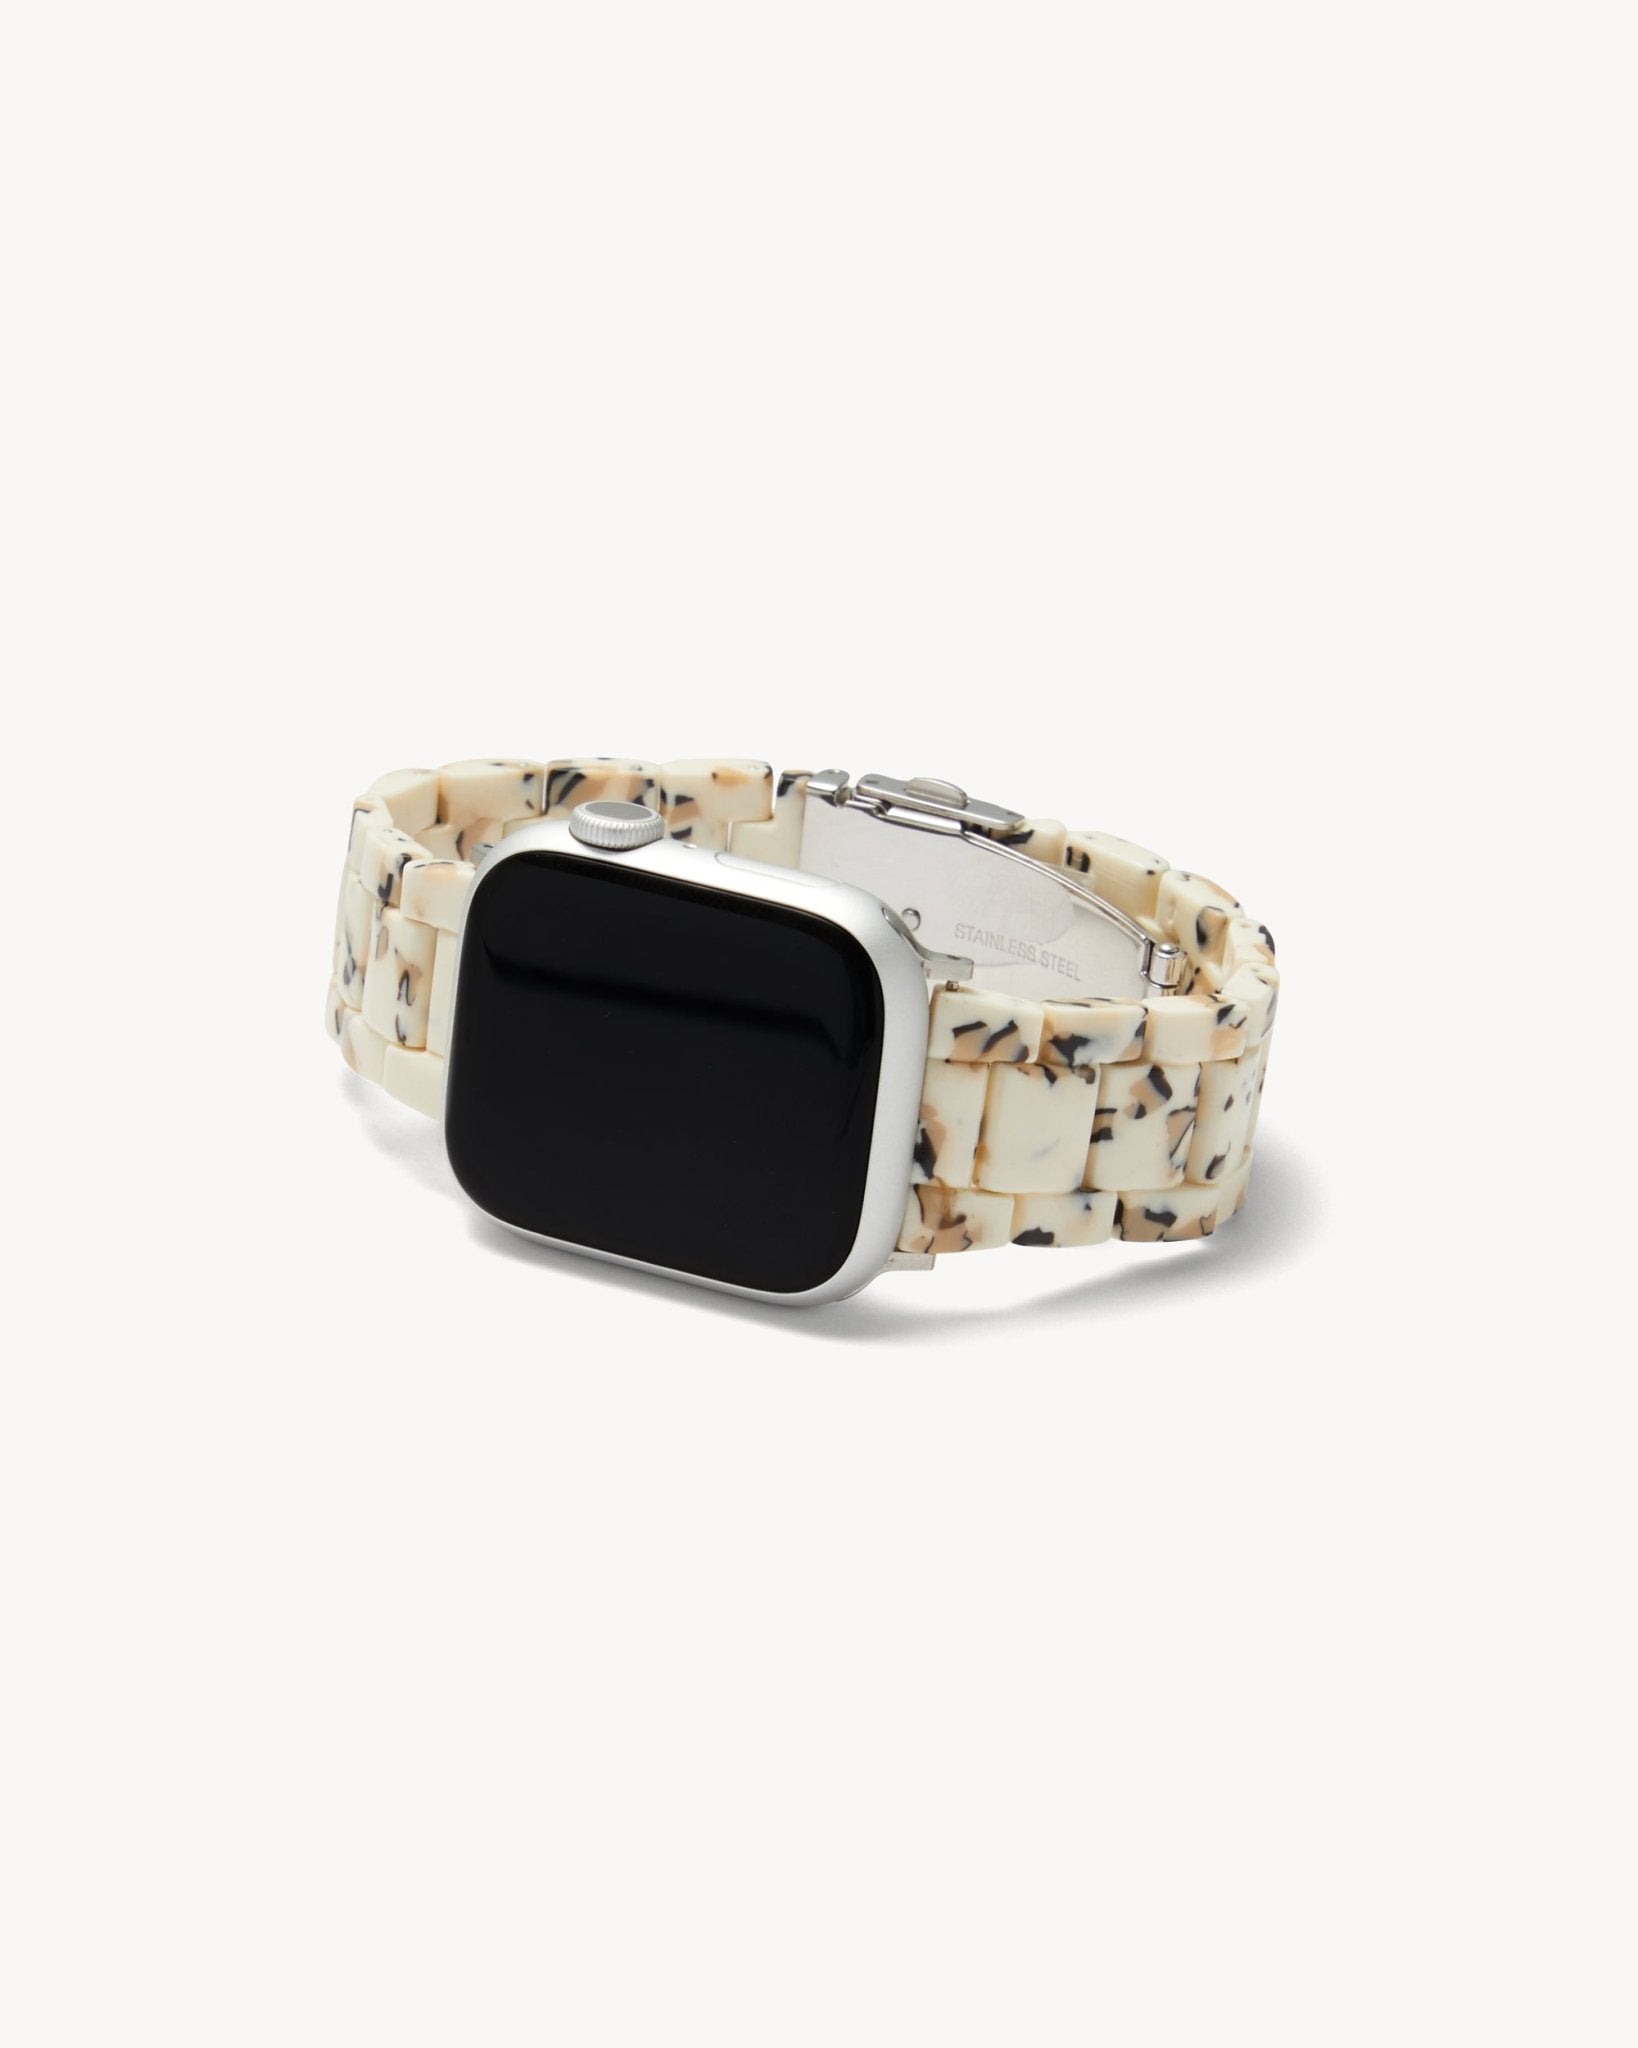 MACHETE Deluxe Apple Watch Band Set in Terazzo